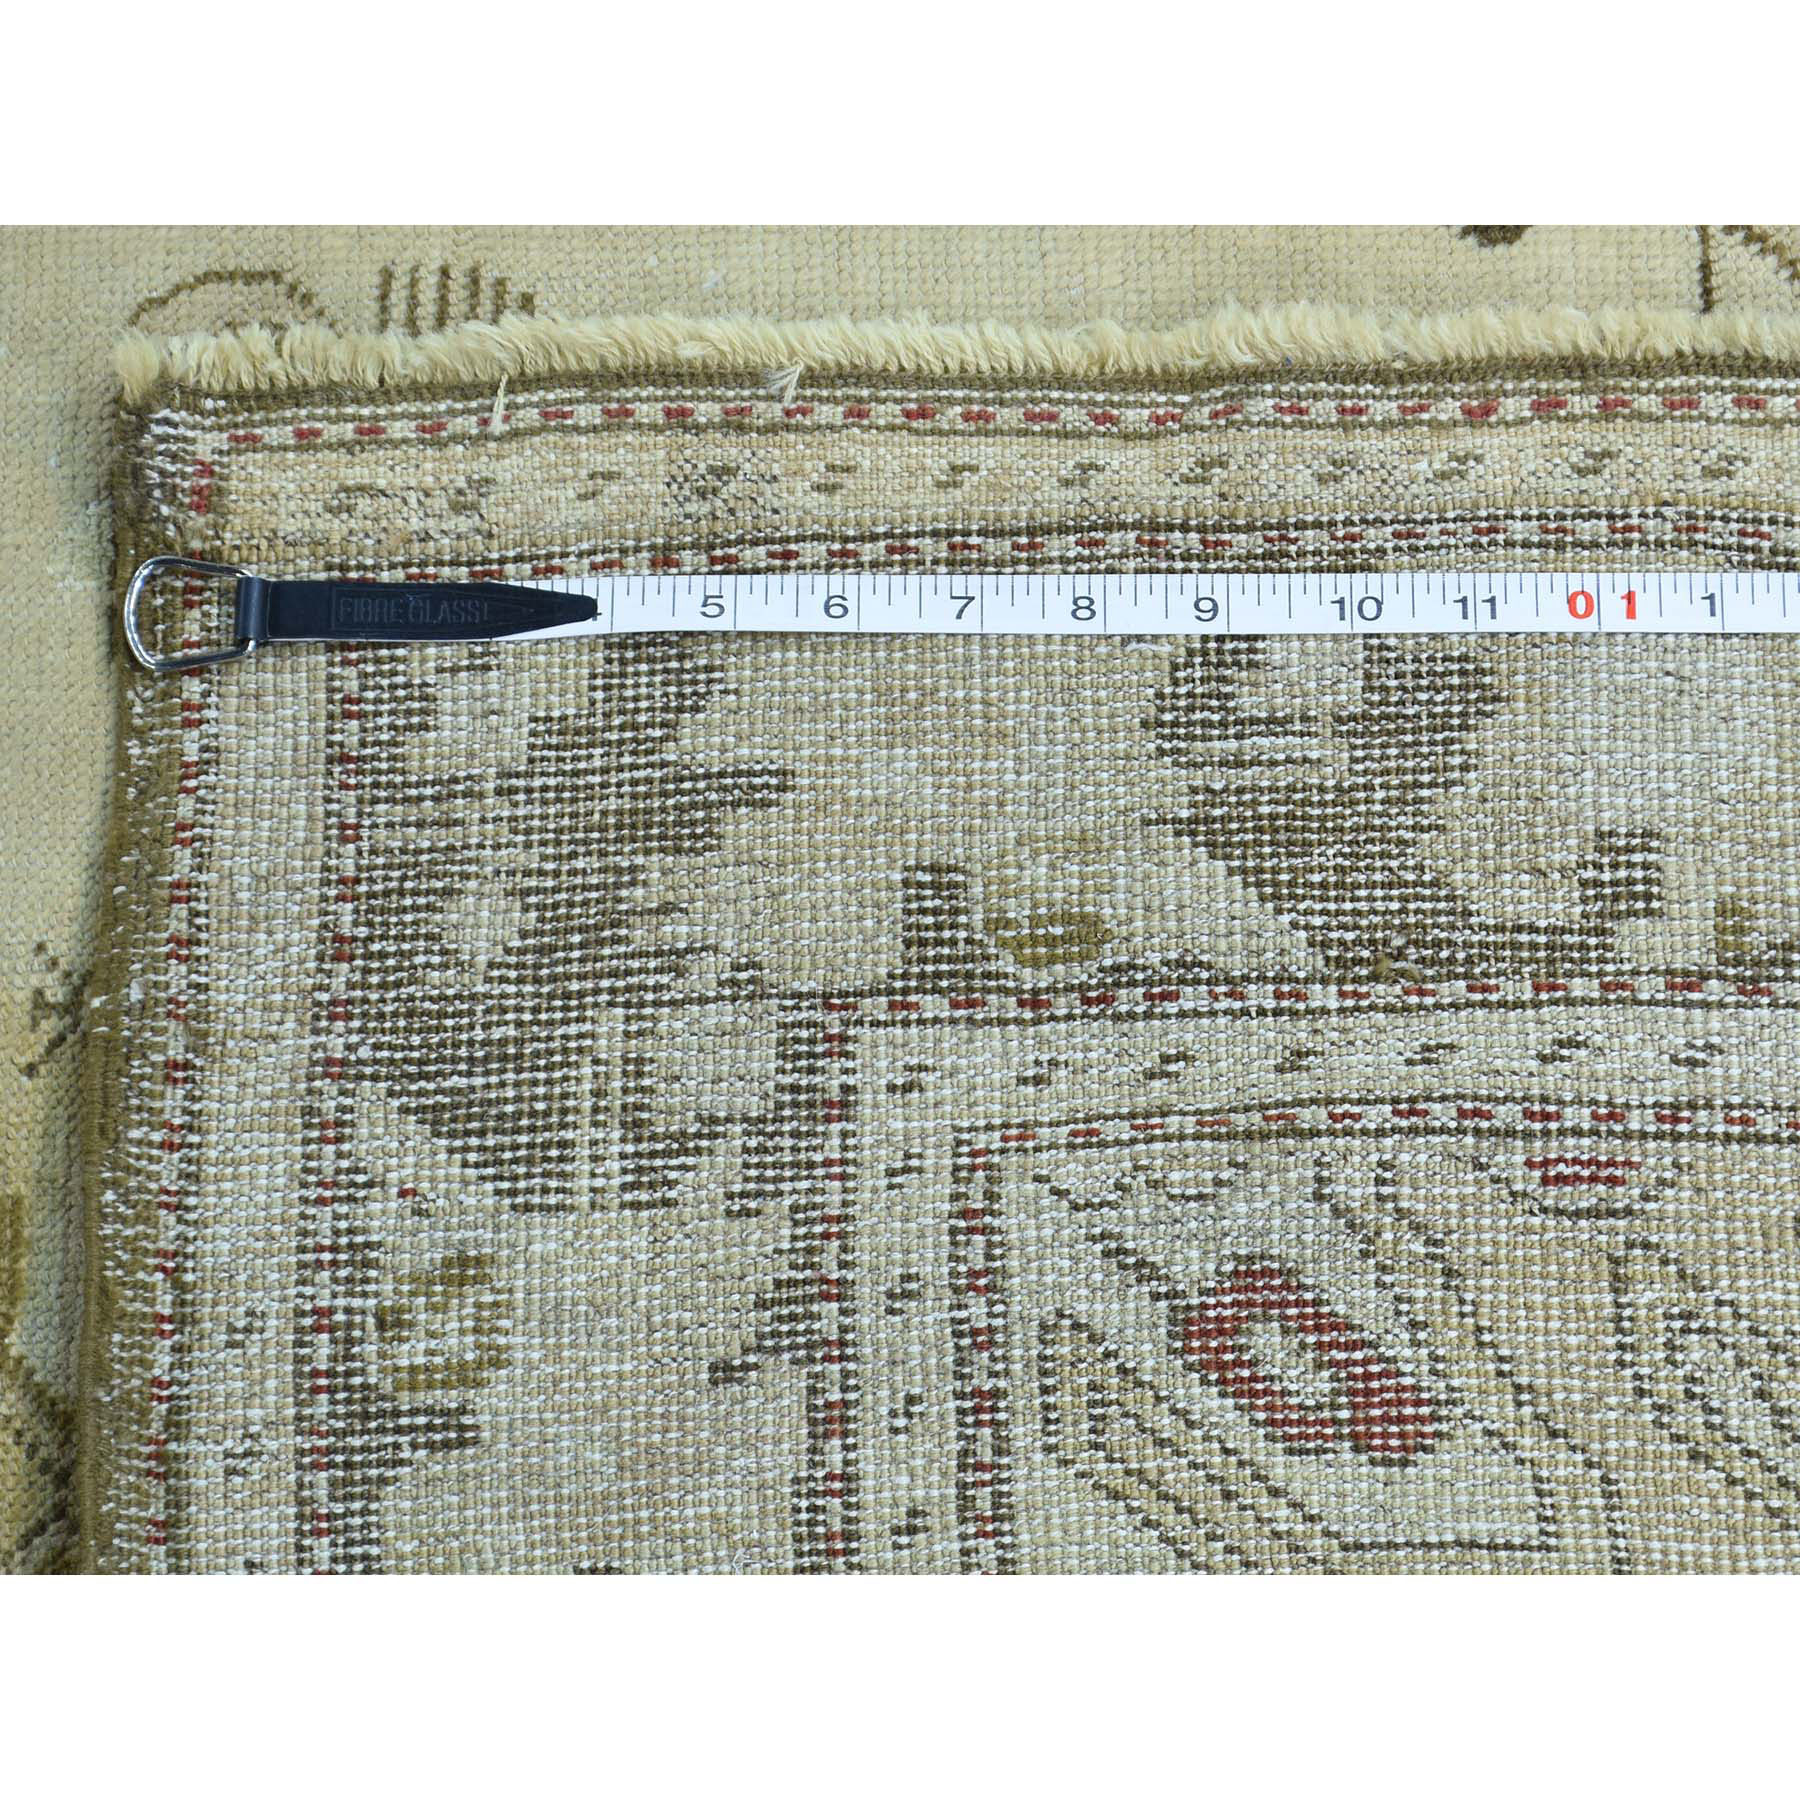 3-8 x15- Handmade Antique Caucasian Karabakh Pure Wool Wide Runner Rug 